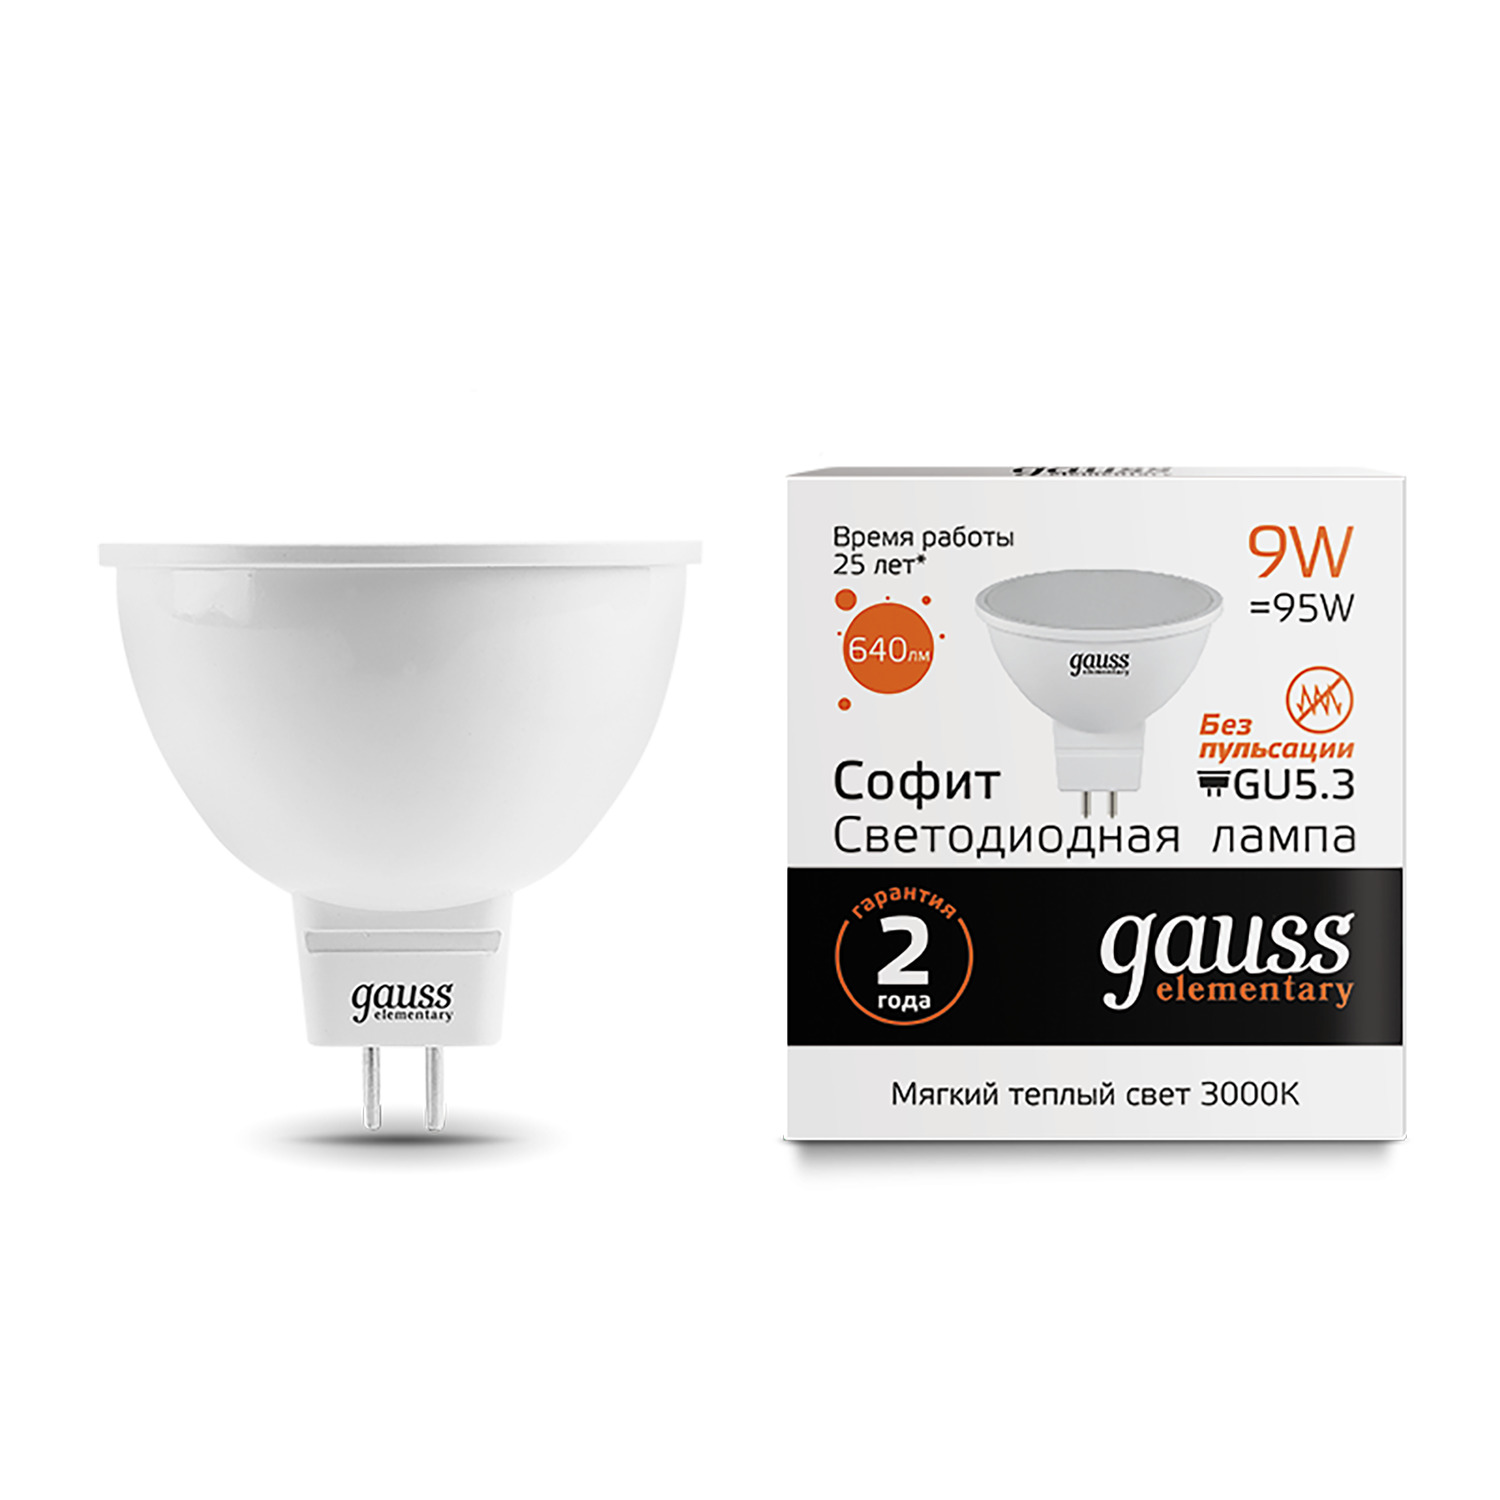 Лампа Gauss LED Elementary MR16 GU5.3 9W 3000K gauss elementary gx53 9w 230v белый свет